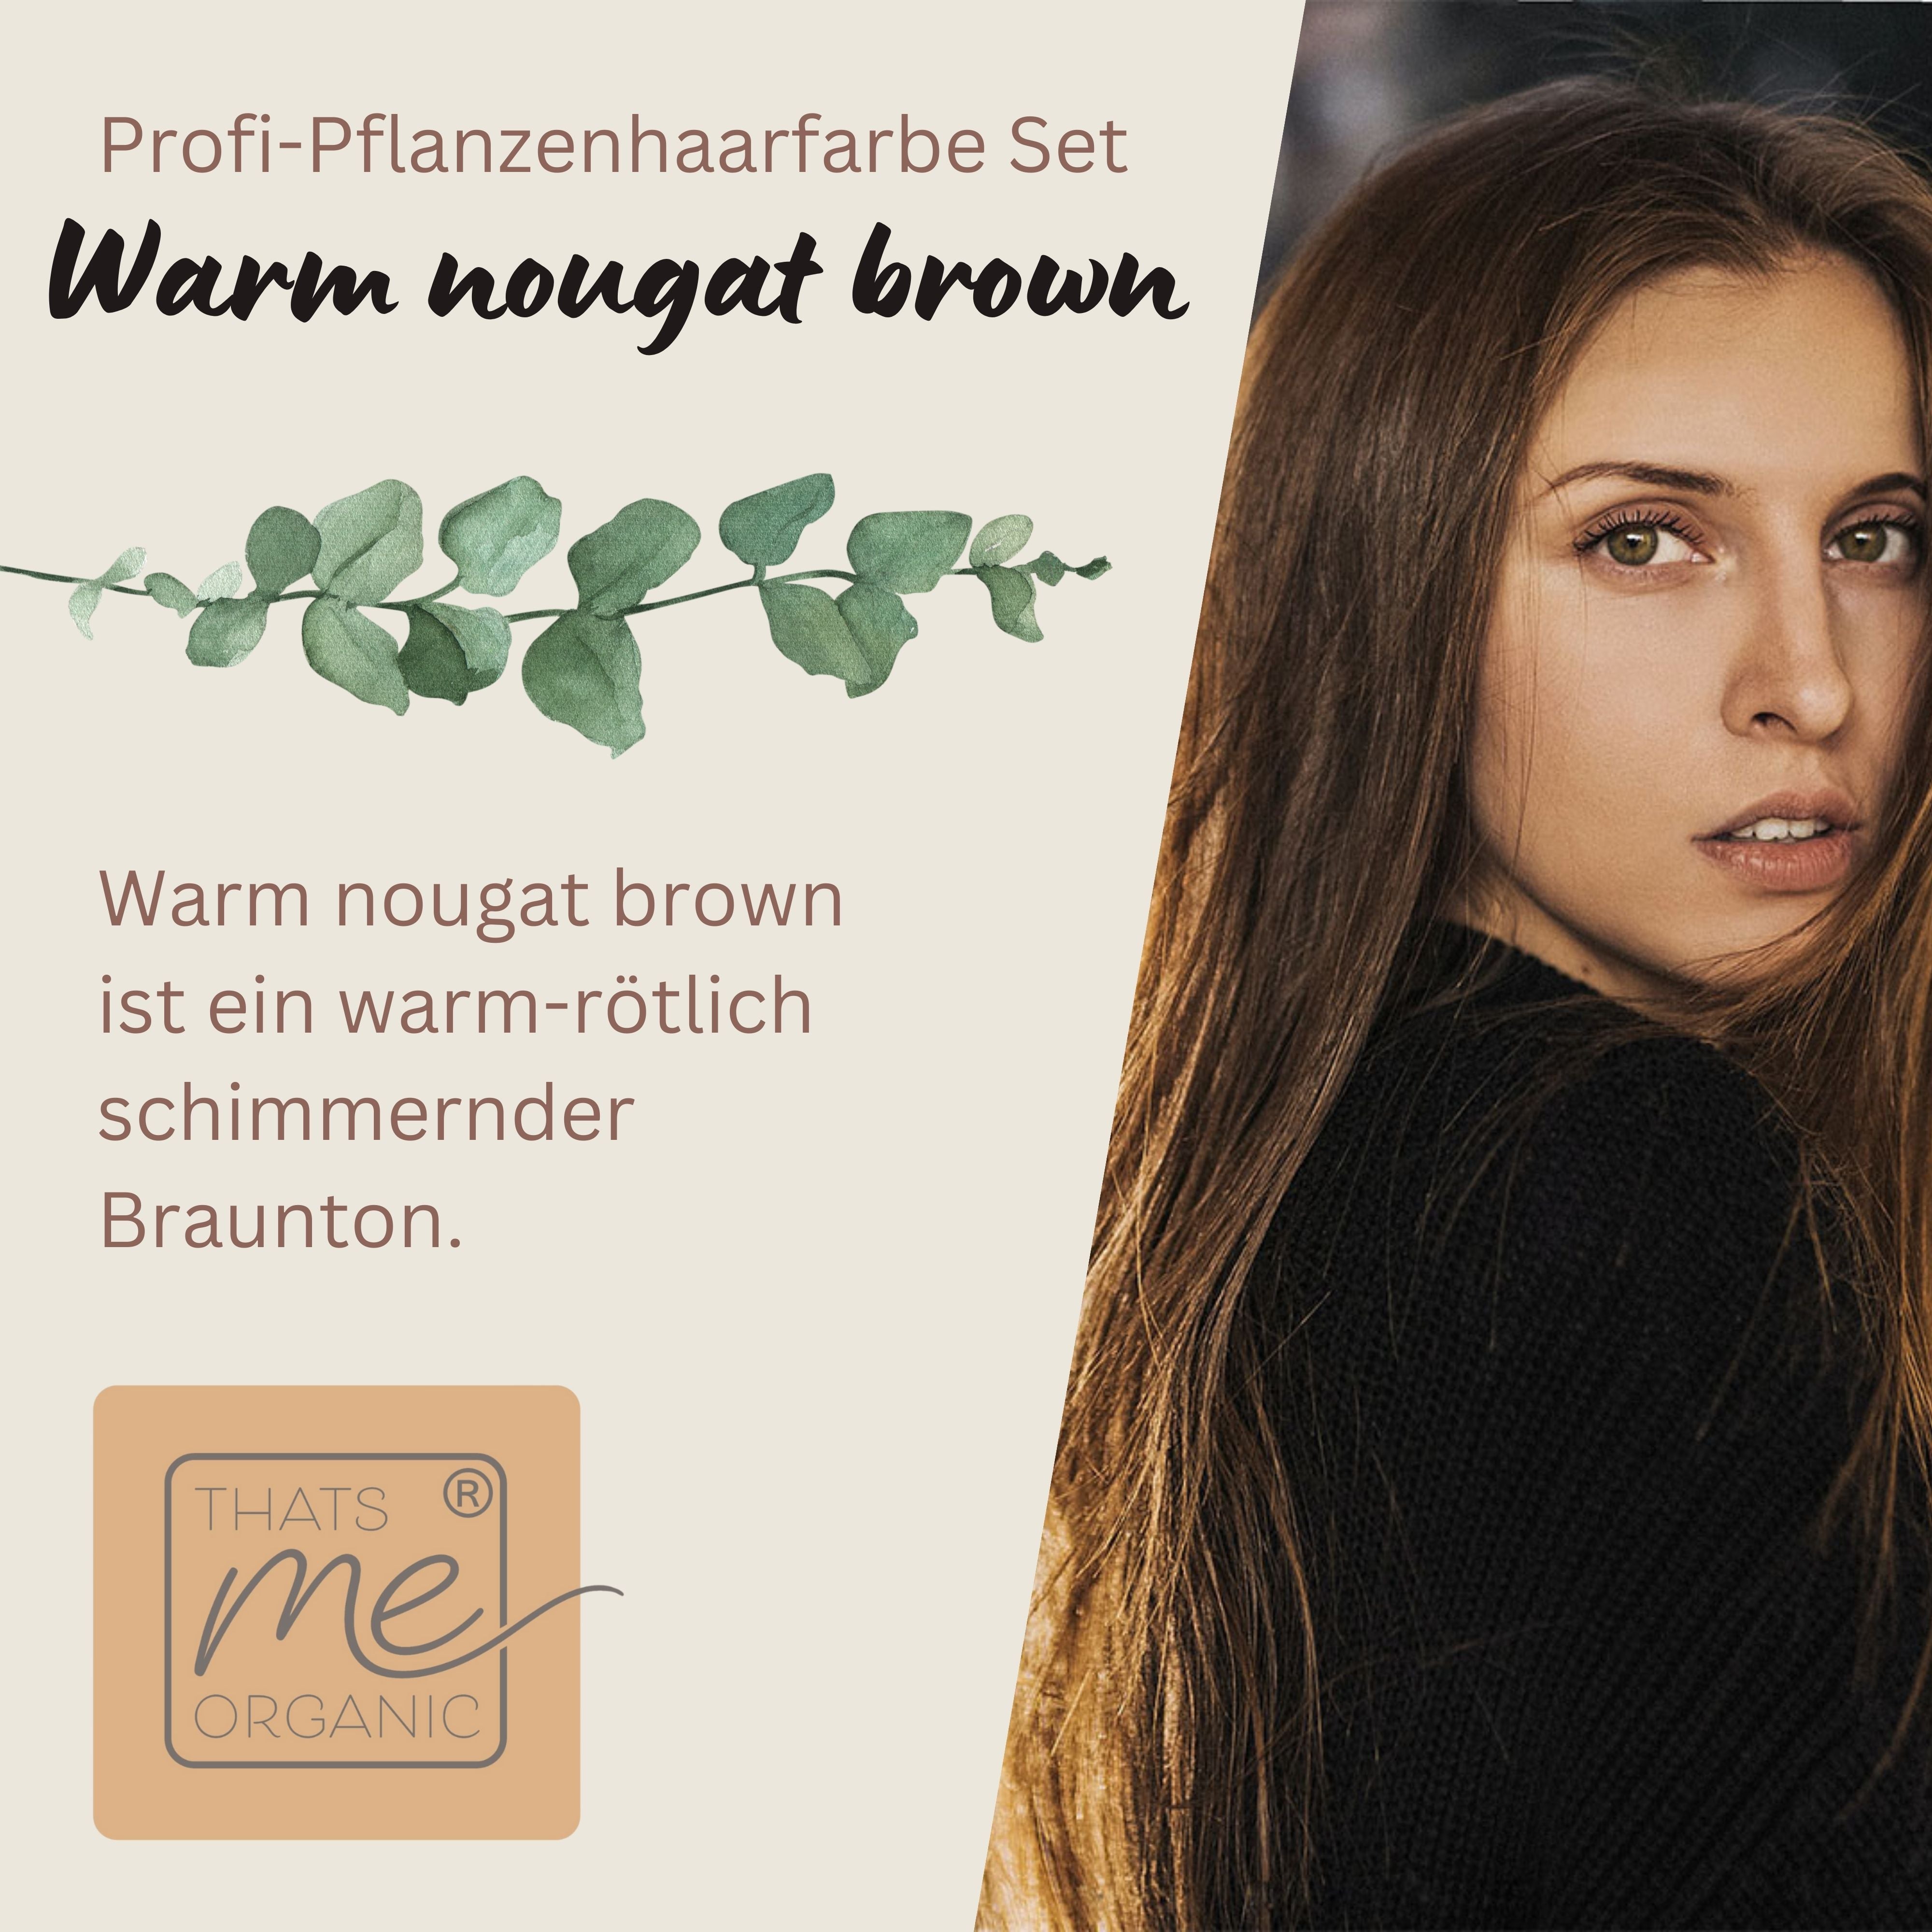 Profi-Pflanzenhaarfarbe warmes Nougat-Braun "warm nougat brown" 90g Nachfüllpack